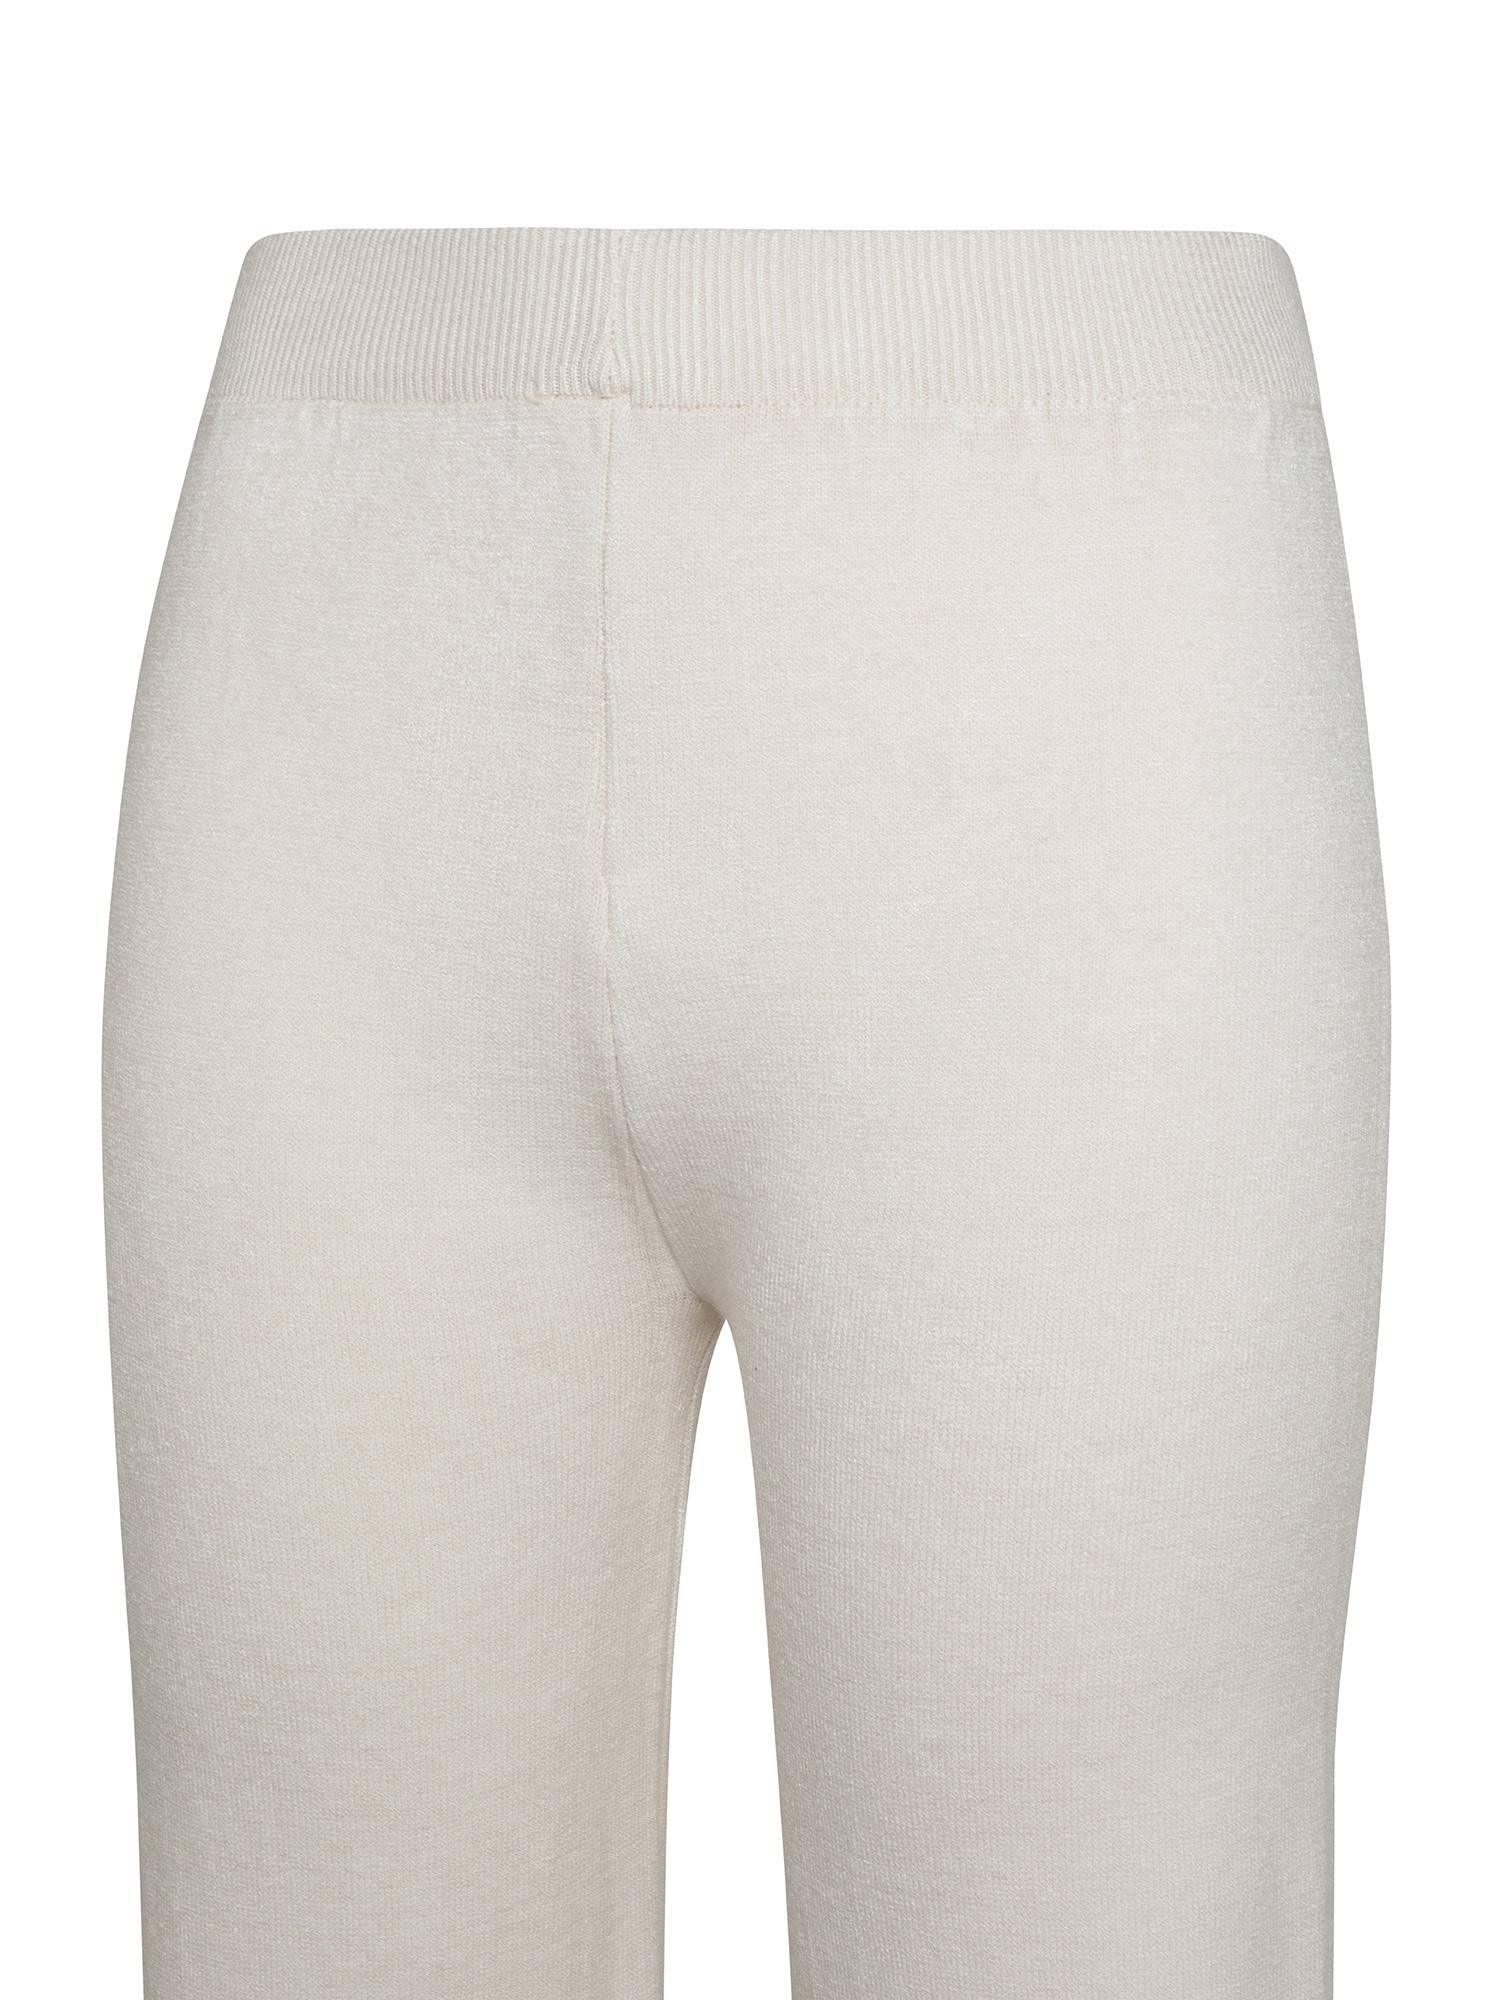 K Collection - Pantalone, Bianco panna, large image number 2